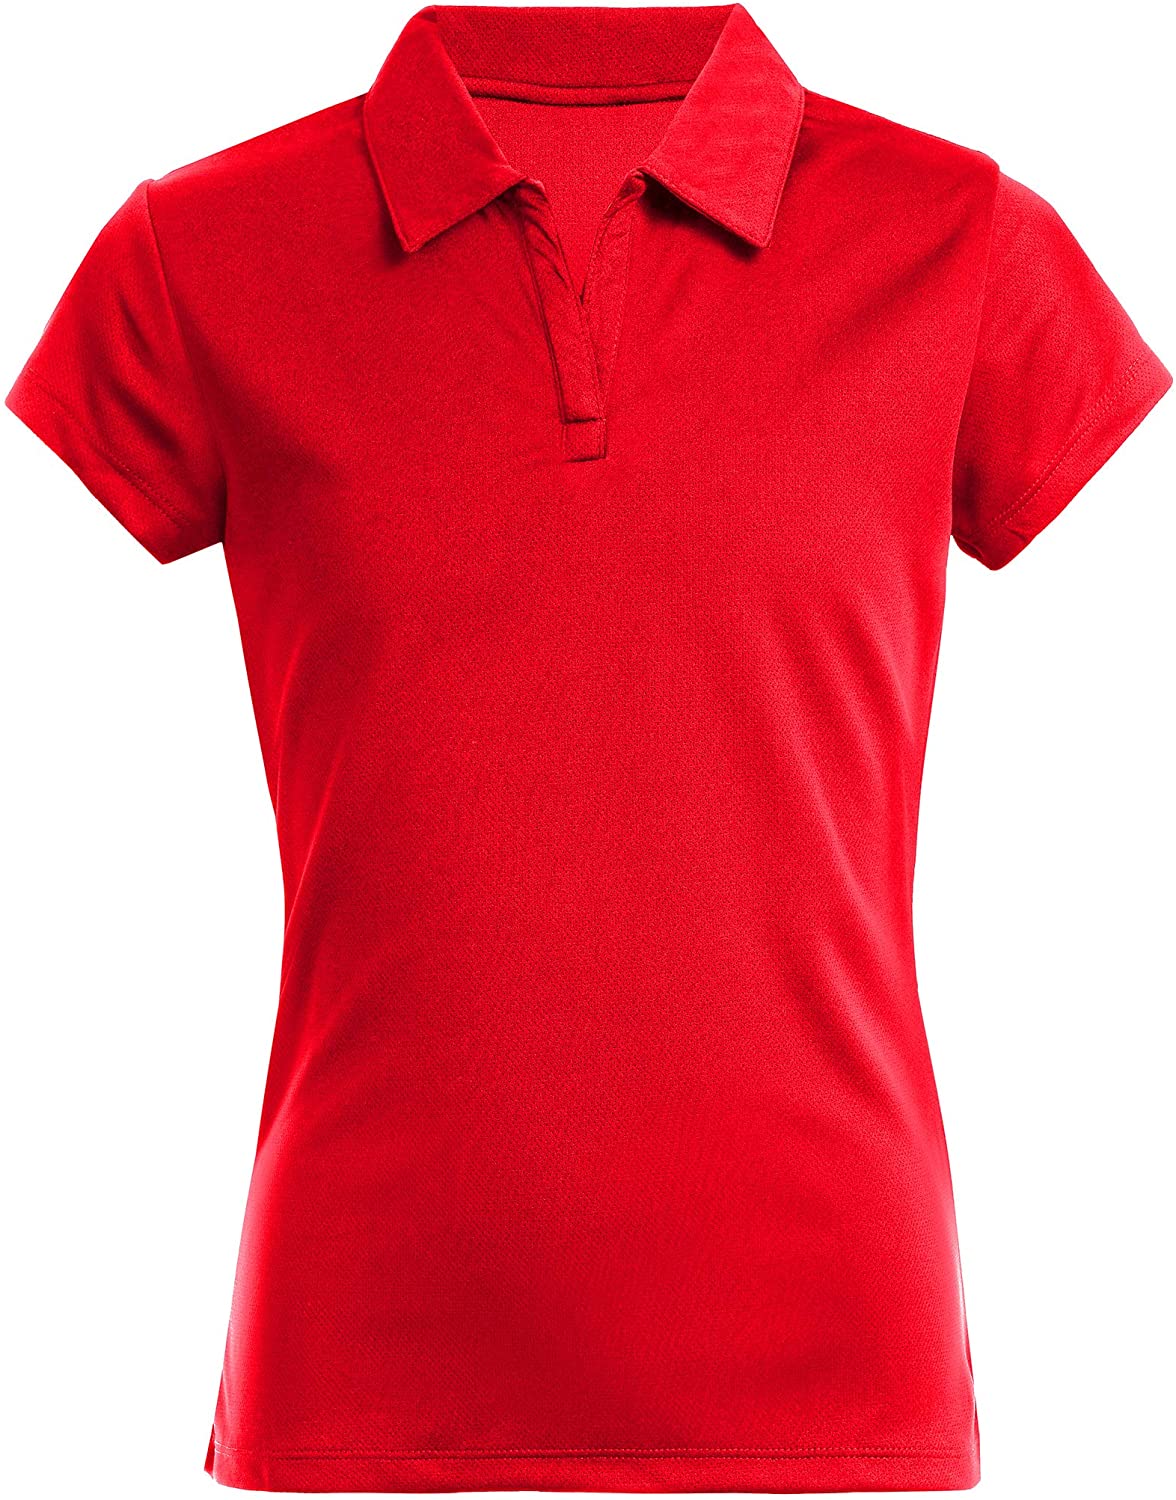 Nautica Girl's School Uniform Short Sleeve Shirtdress Dress 